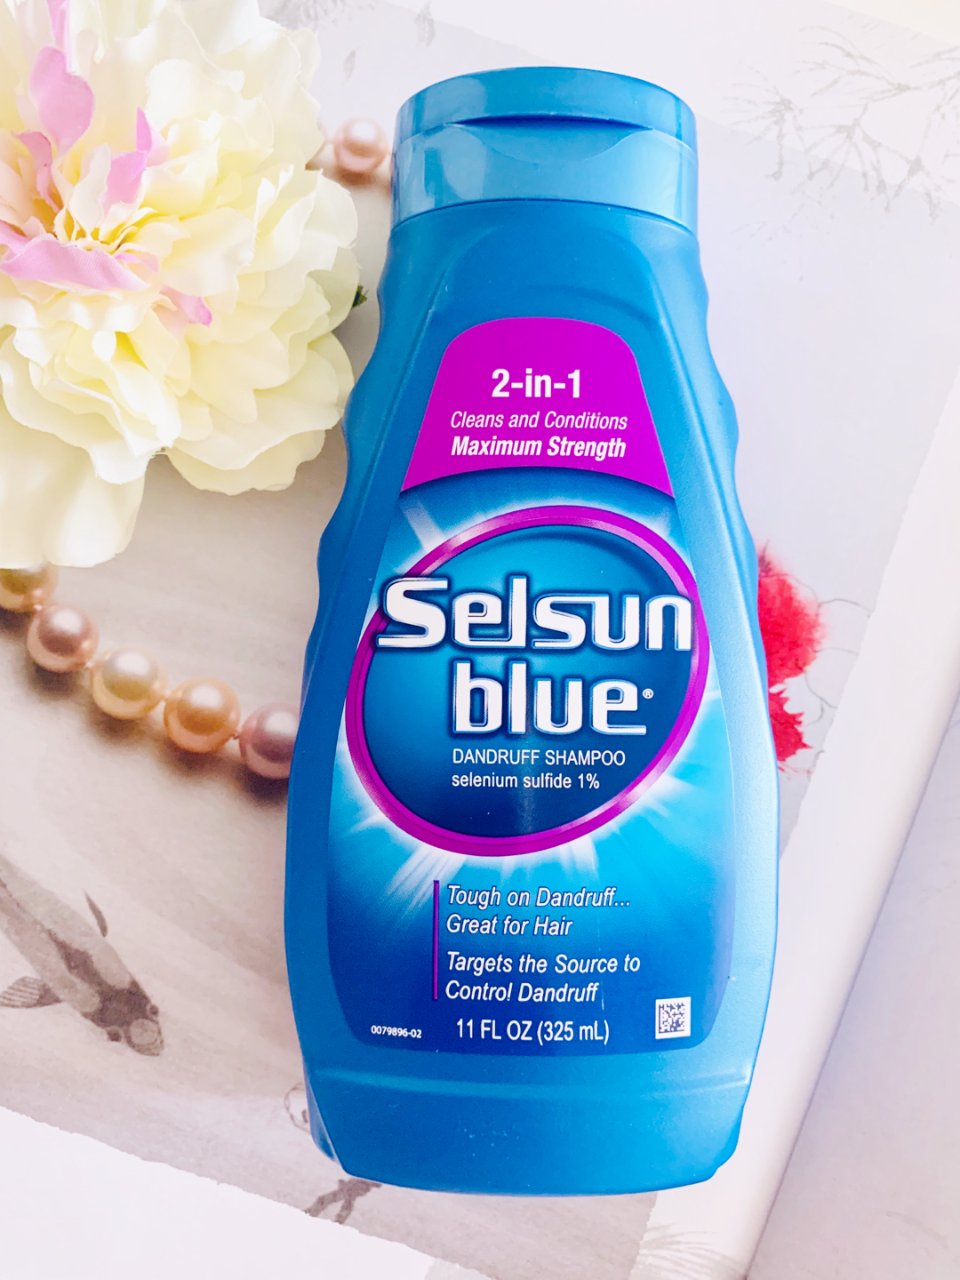 Selsun Blue,洗发水